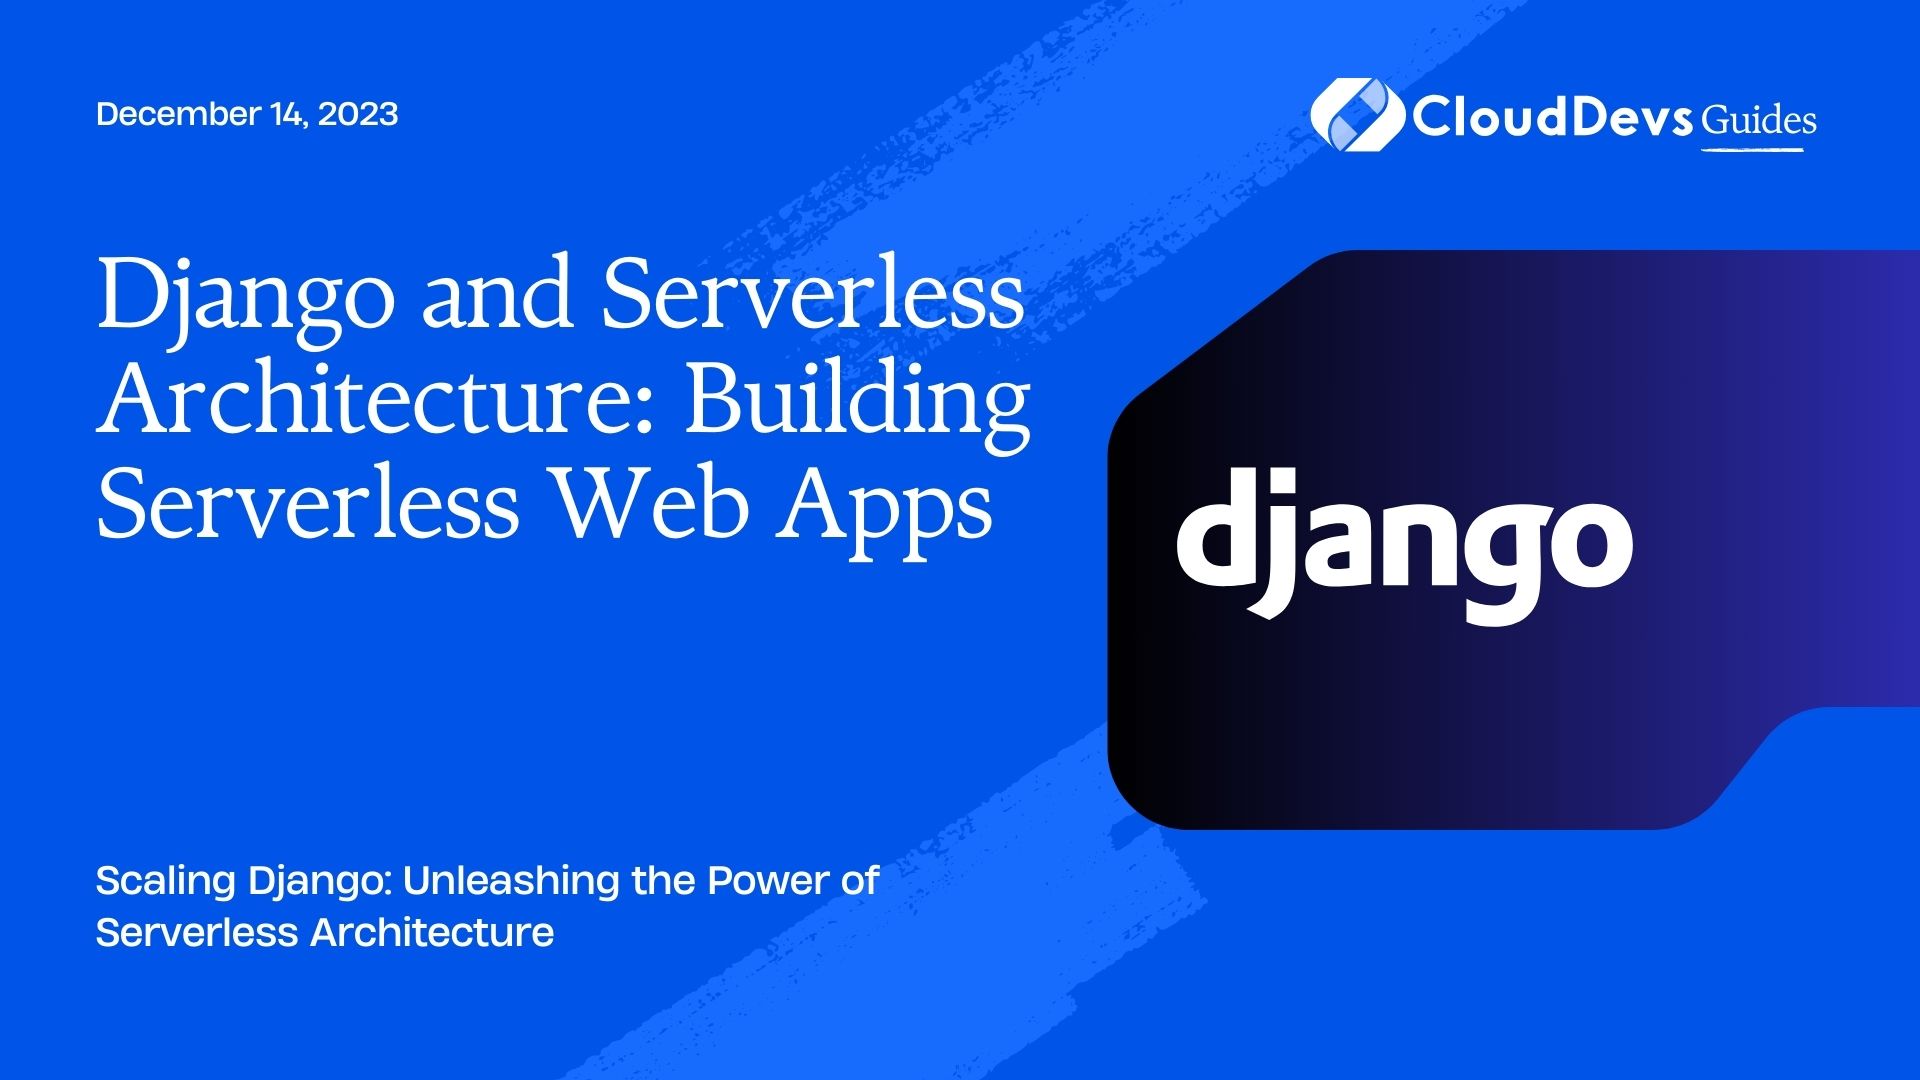 Django and Serverless Architecture: Building Serverless Web Apps